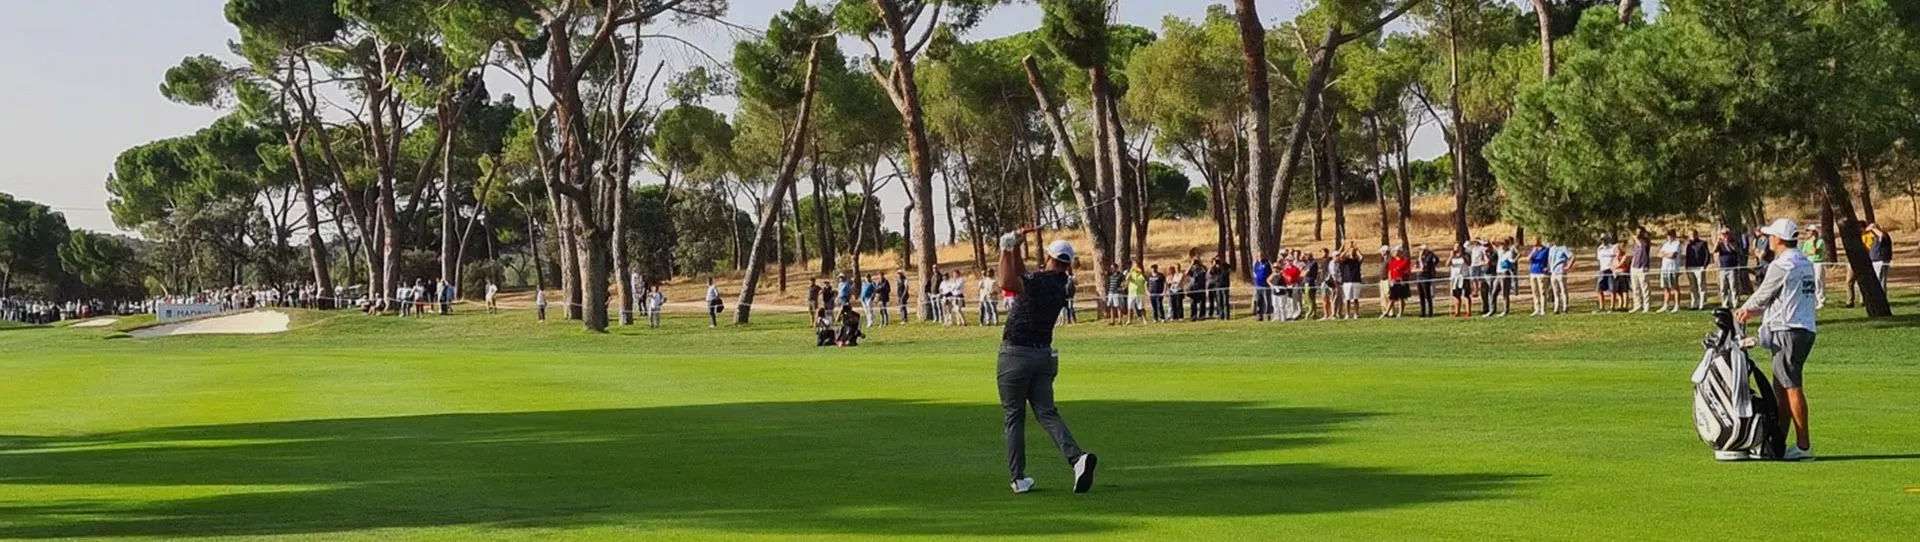 Spain golf courses - Villa de Madrid Golf Black Course - Photo 2